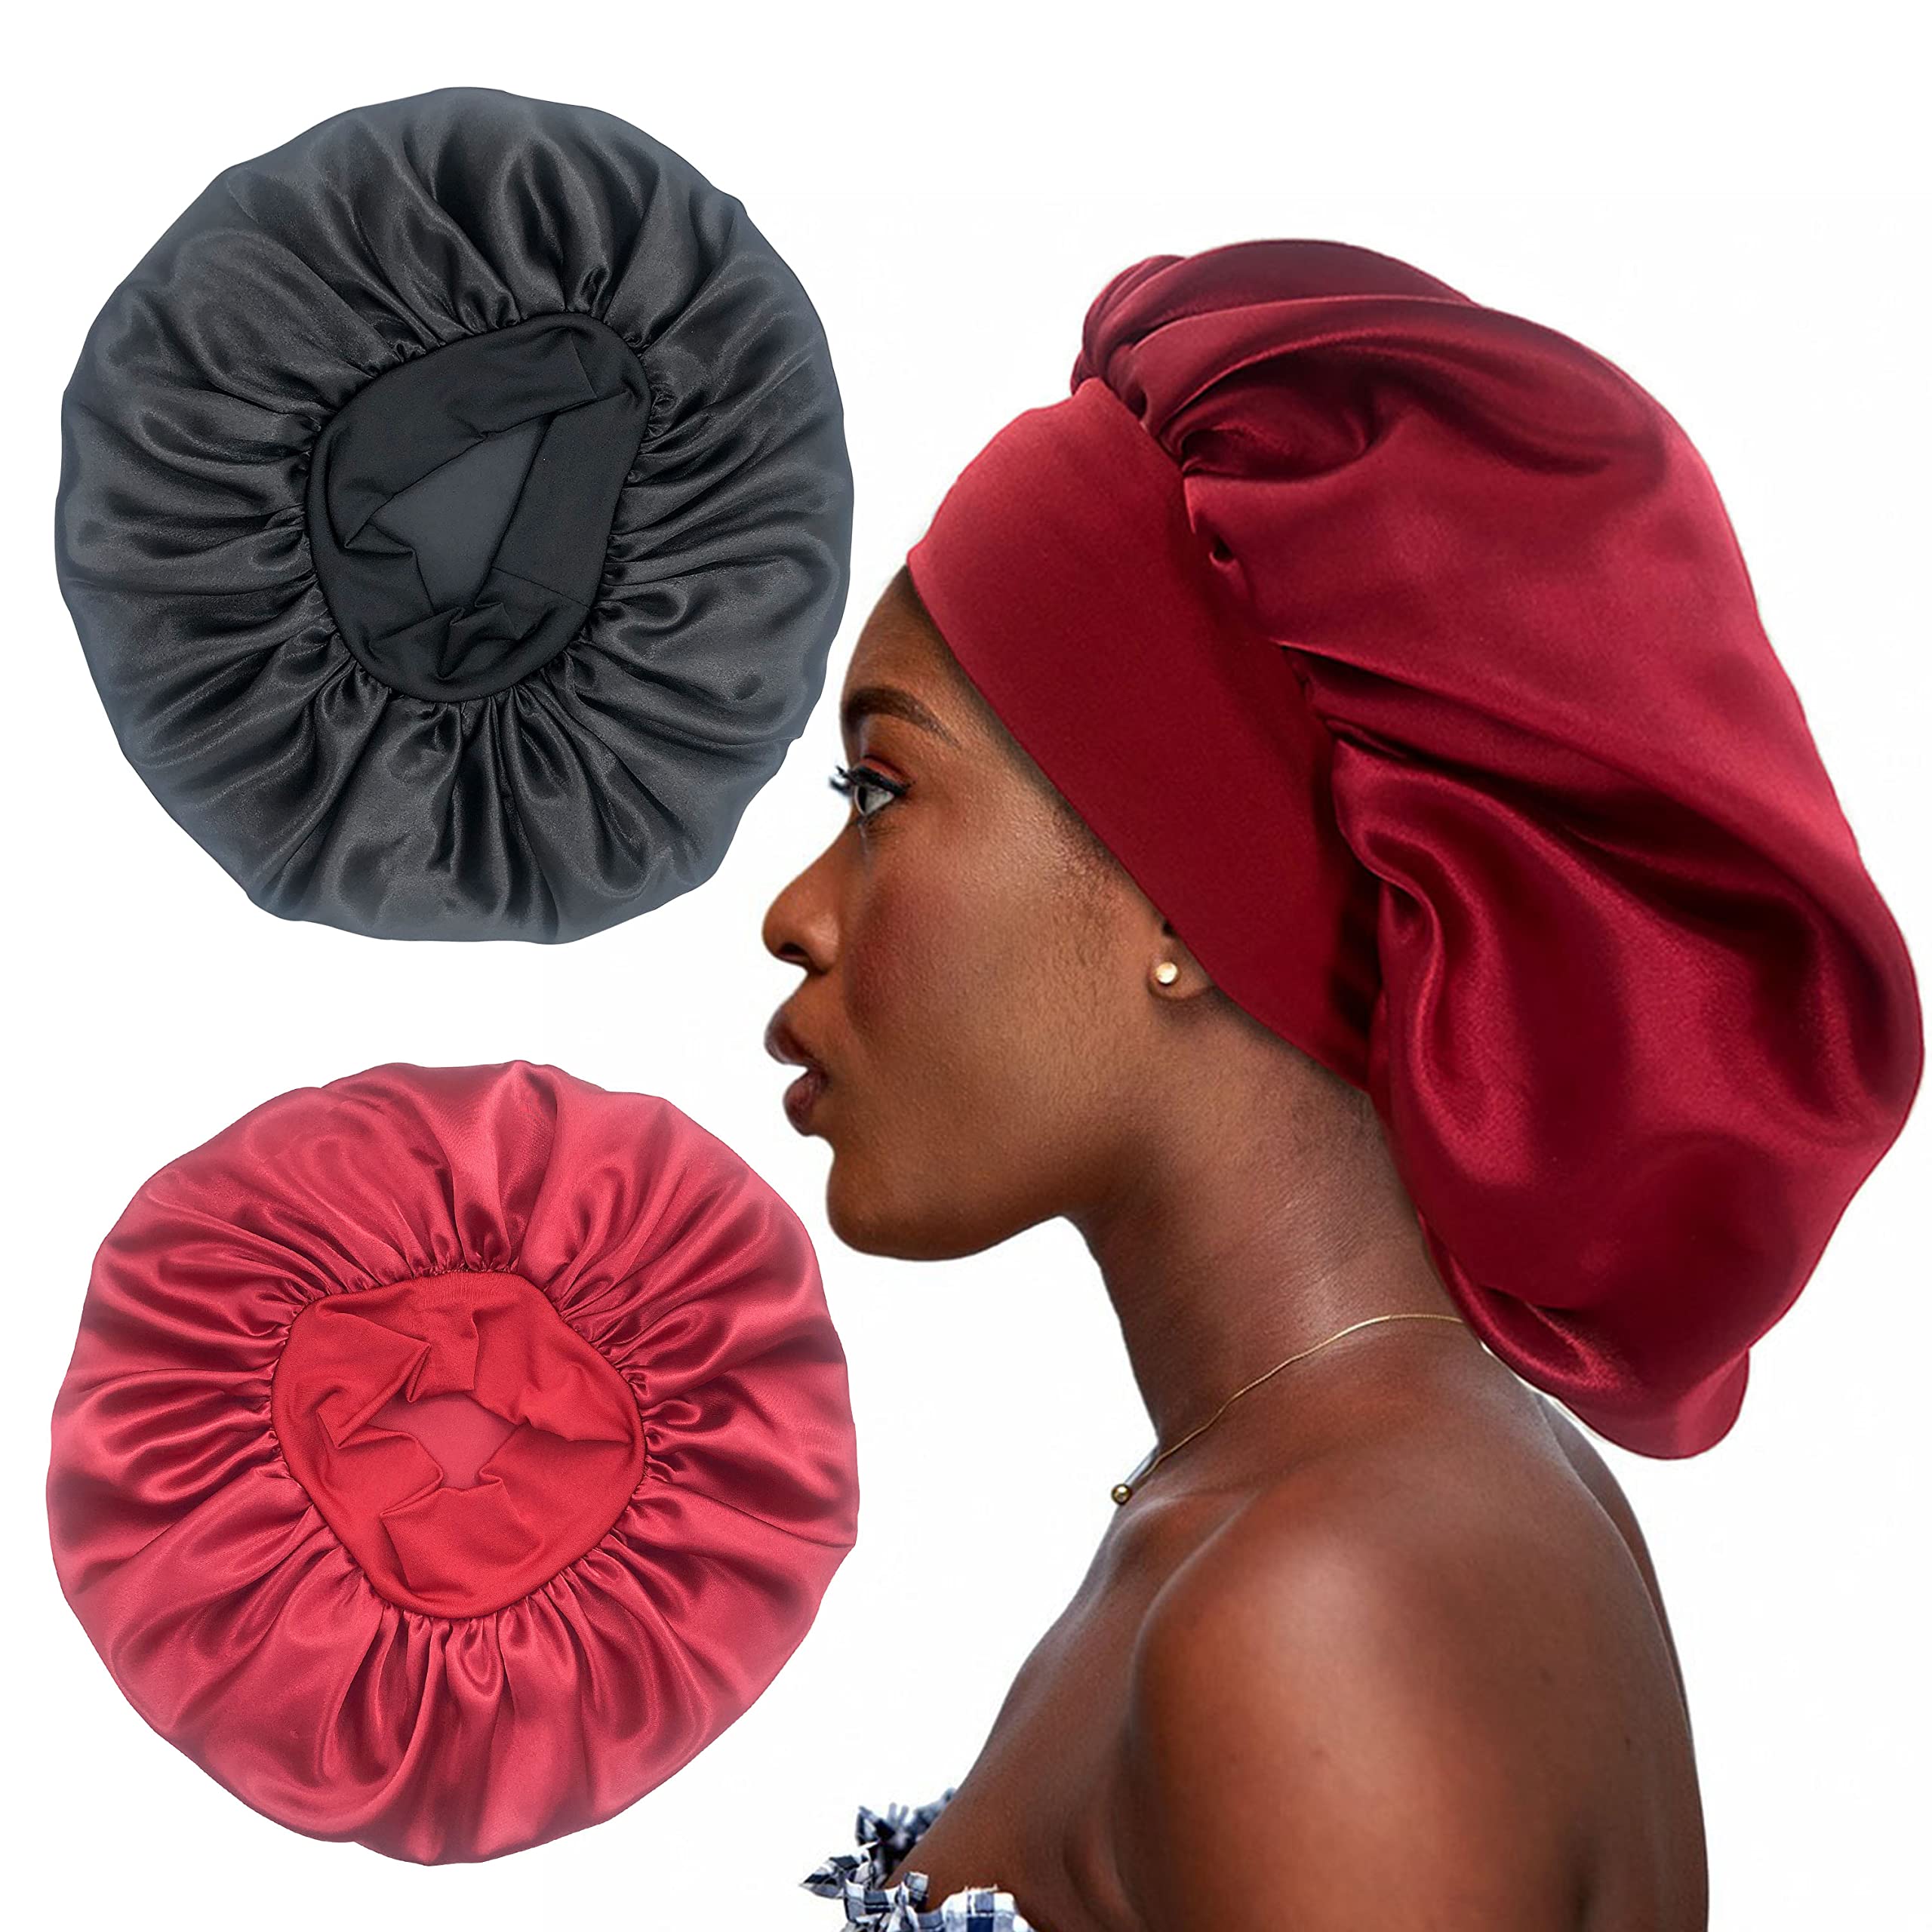 Silk Bonnet for Sleeping, Satin Hair Bonnets Large Sleep Cap for